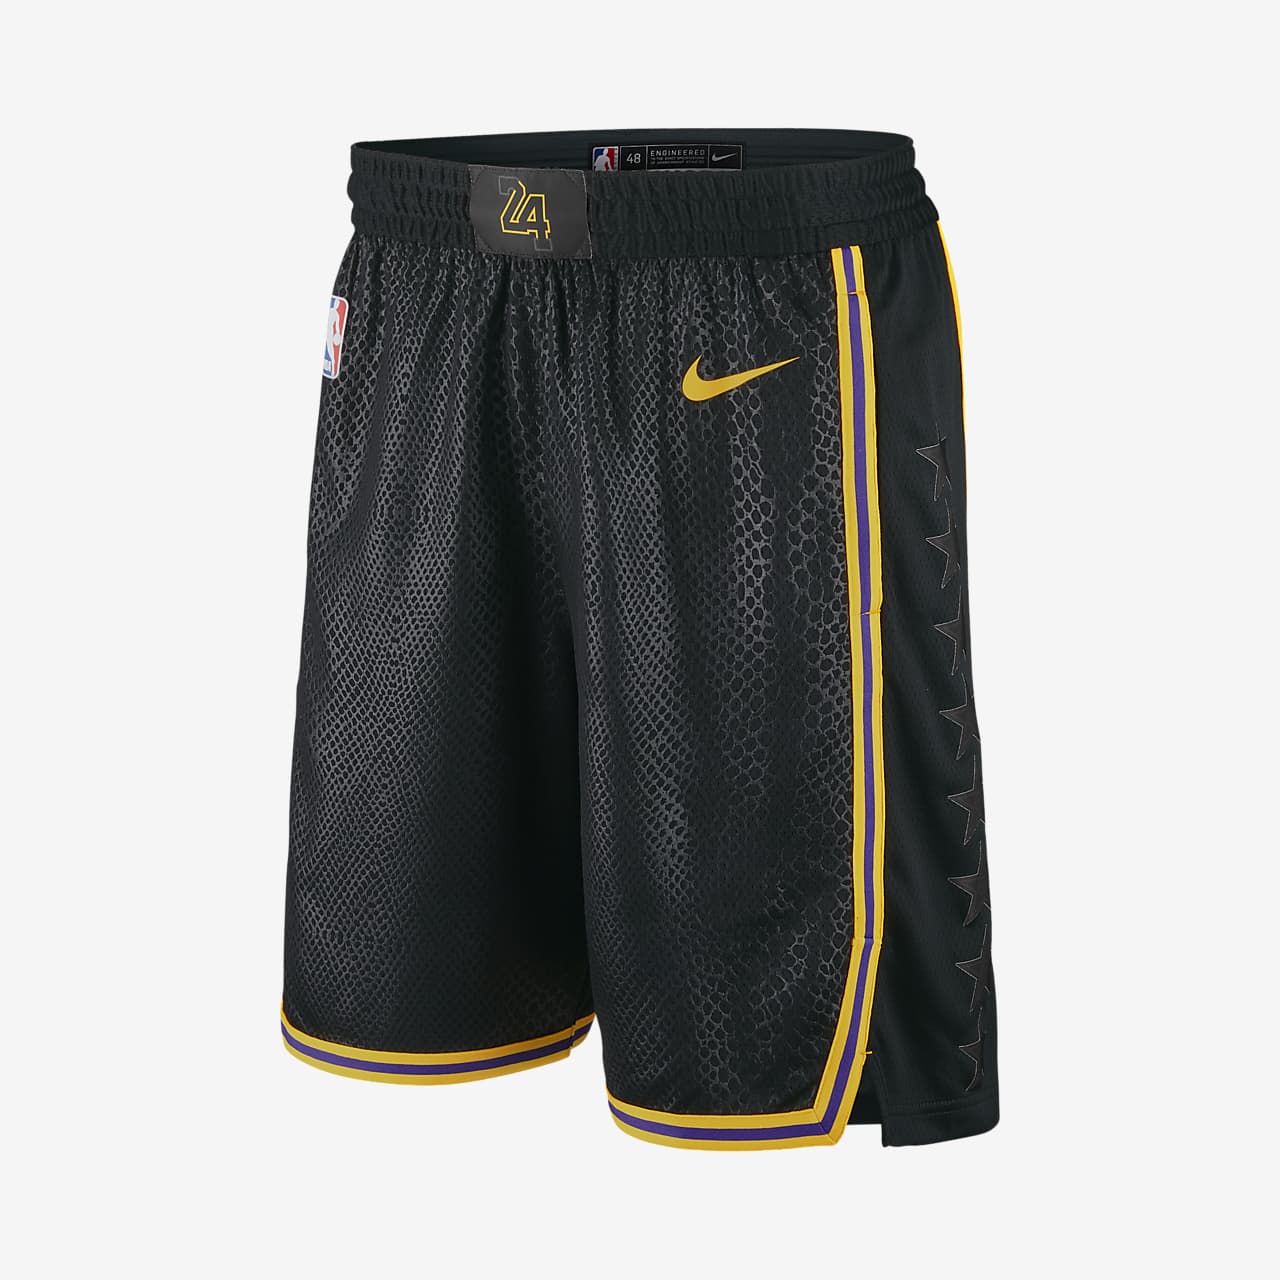 nike lakers basketball shorts